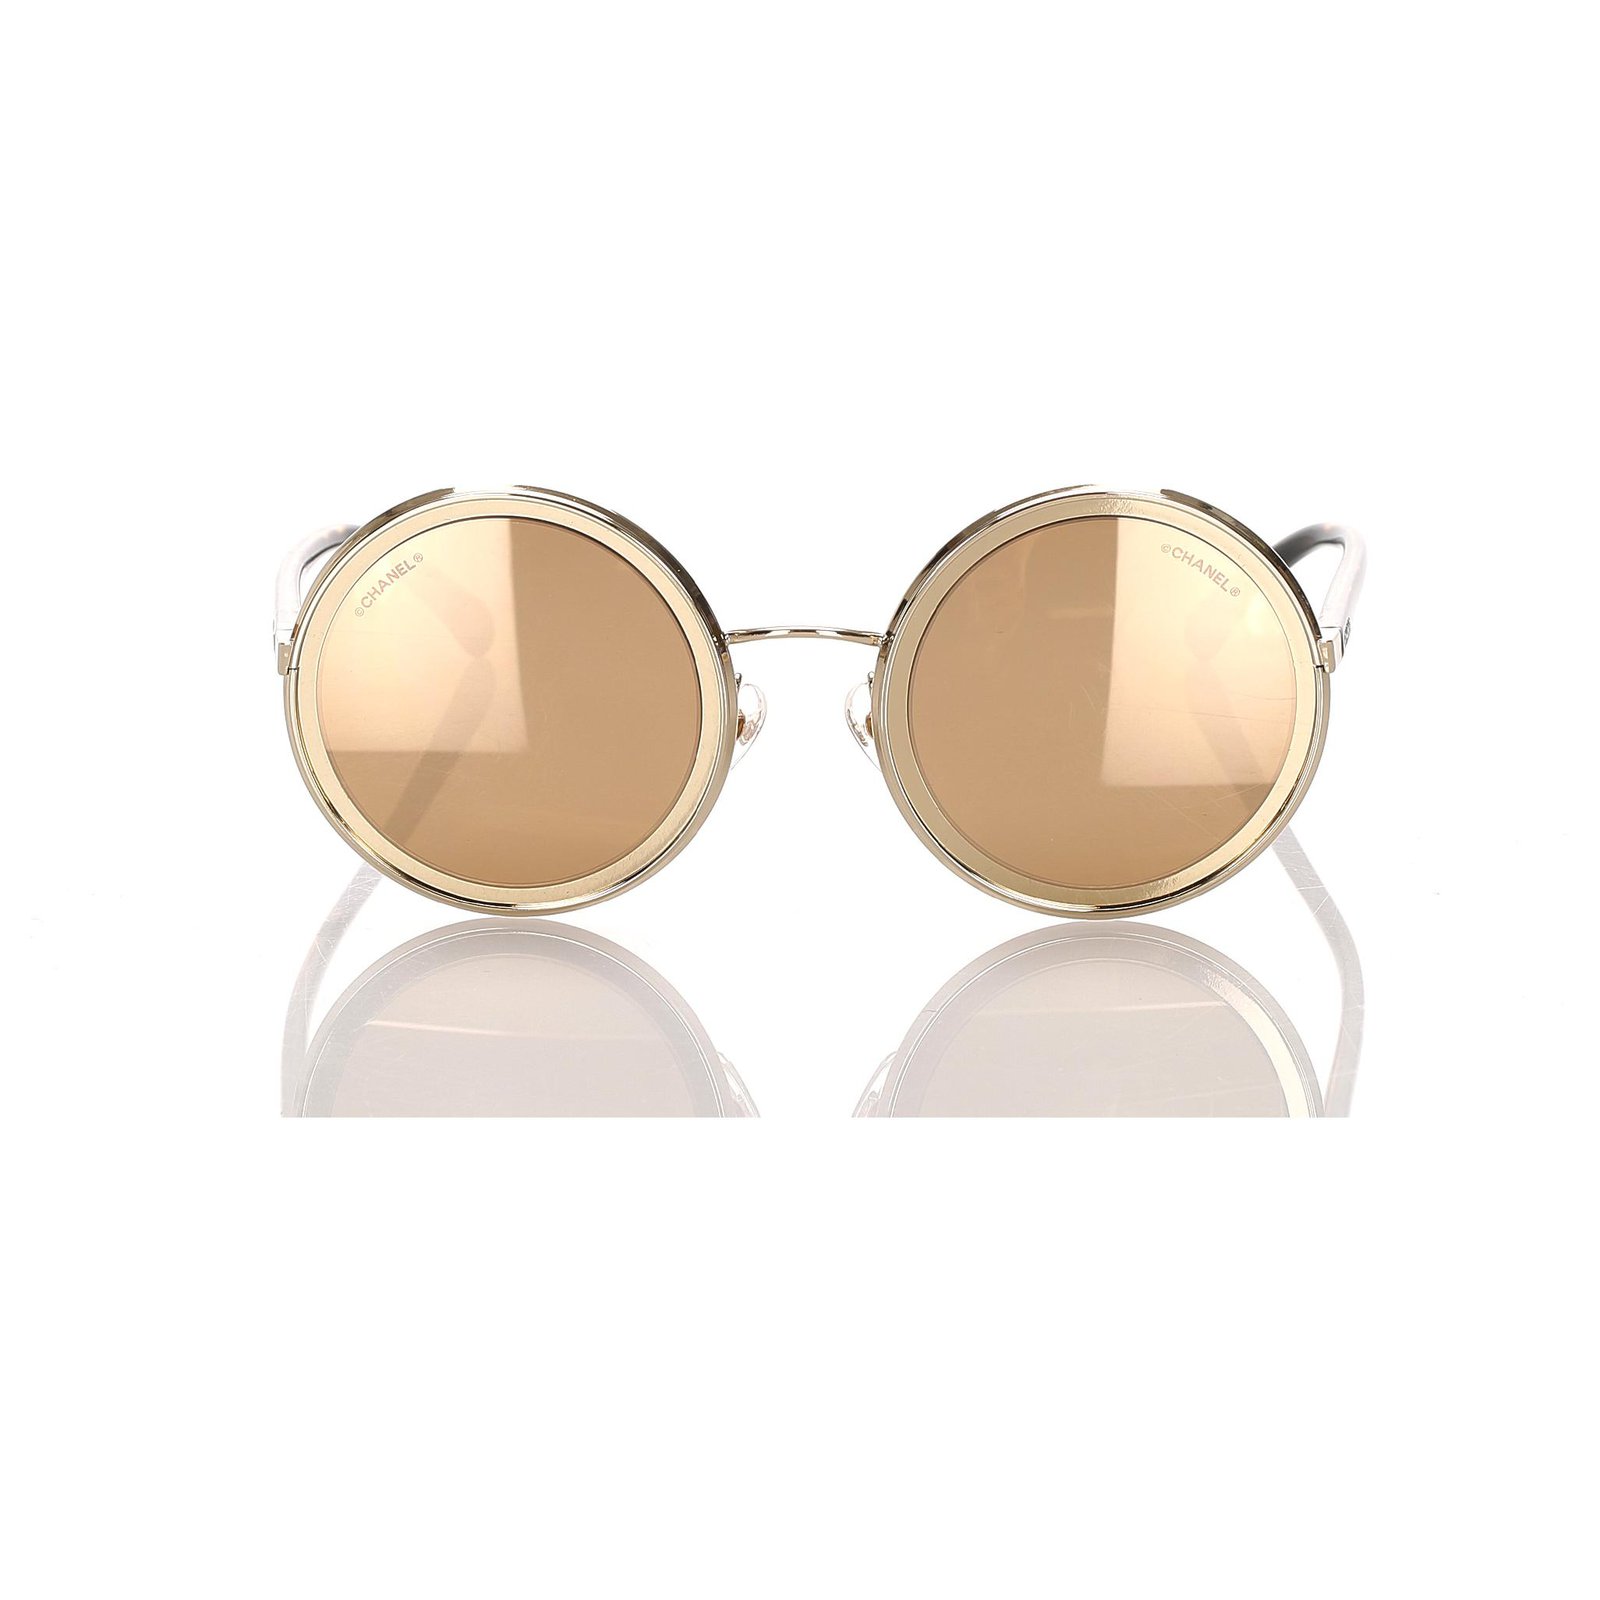 Chanel Gold 18K Round Mirror Sunglasses